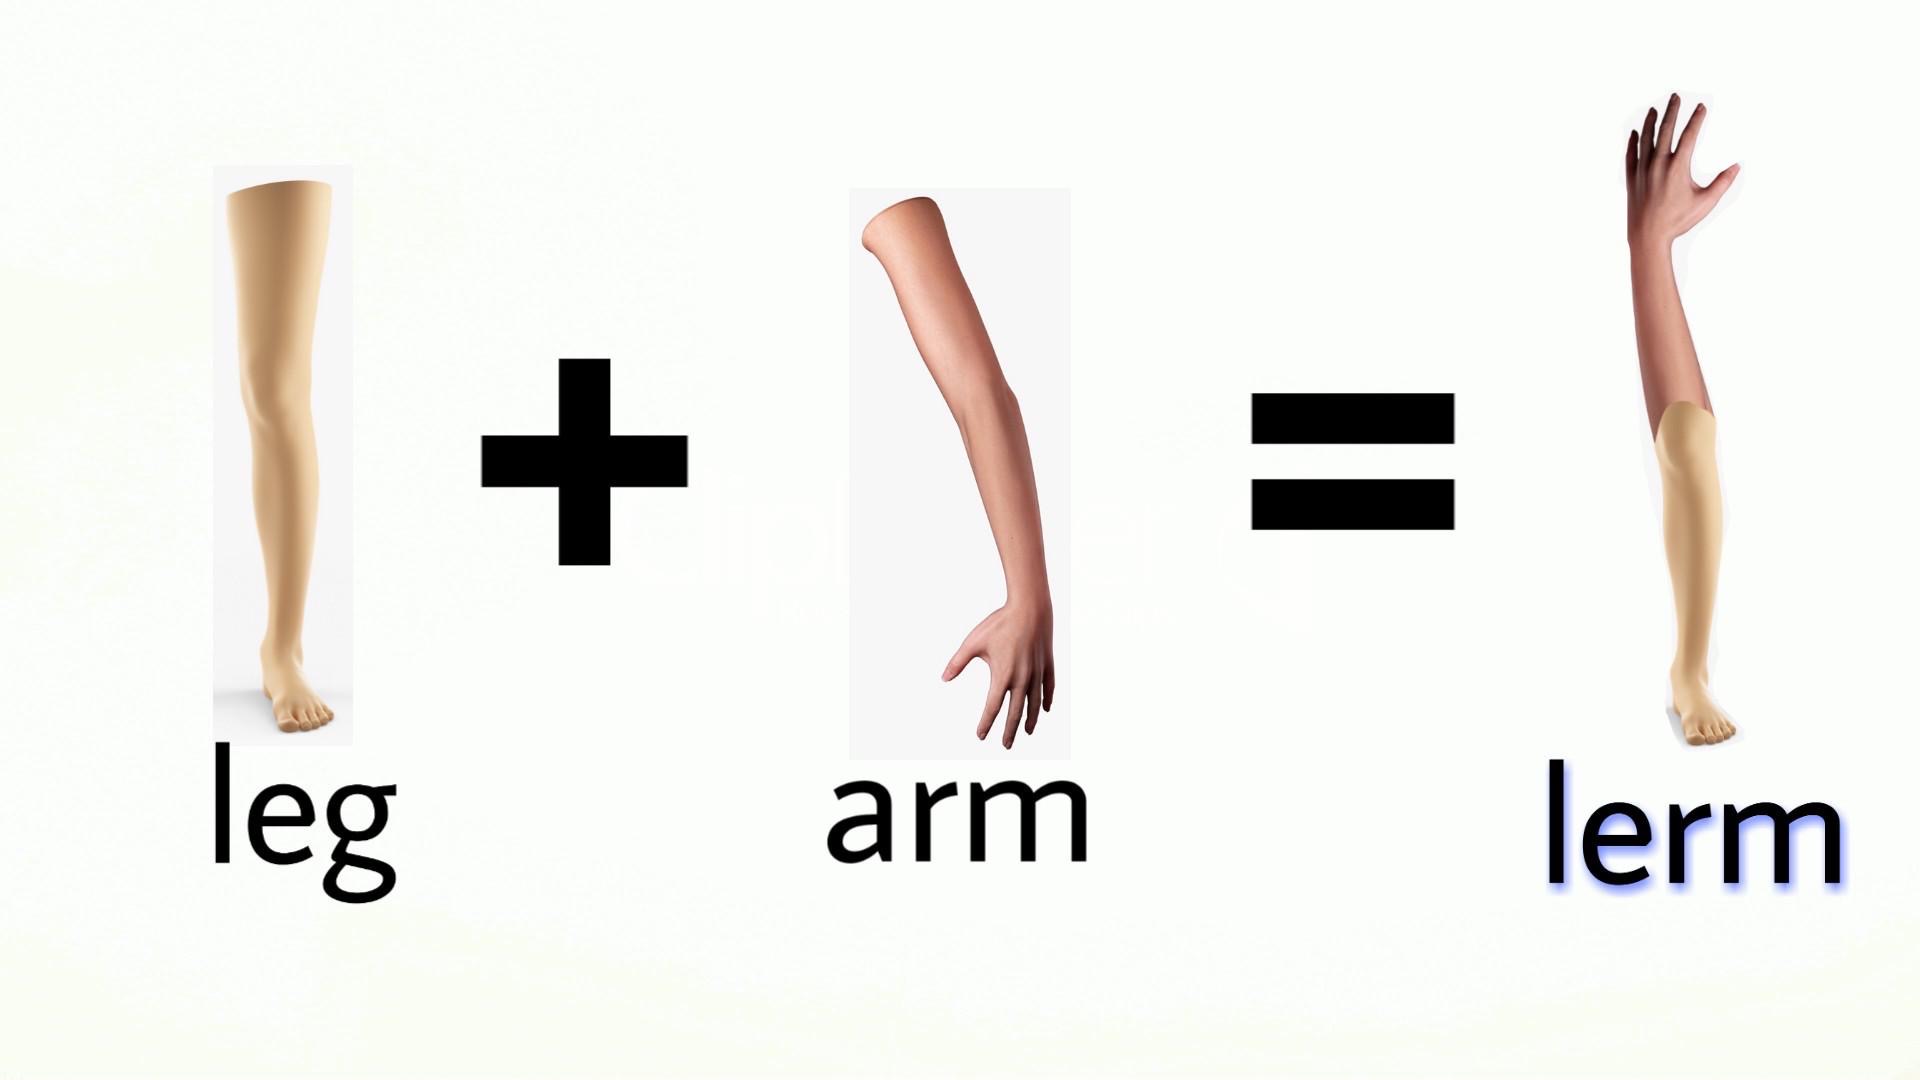 surreal memes - human leg - leg arm lerm